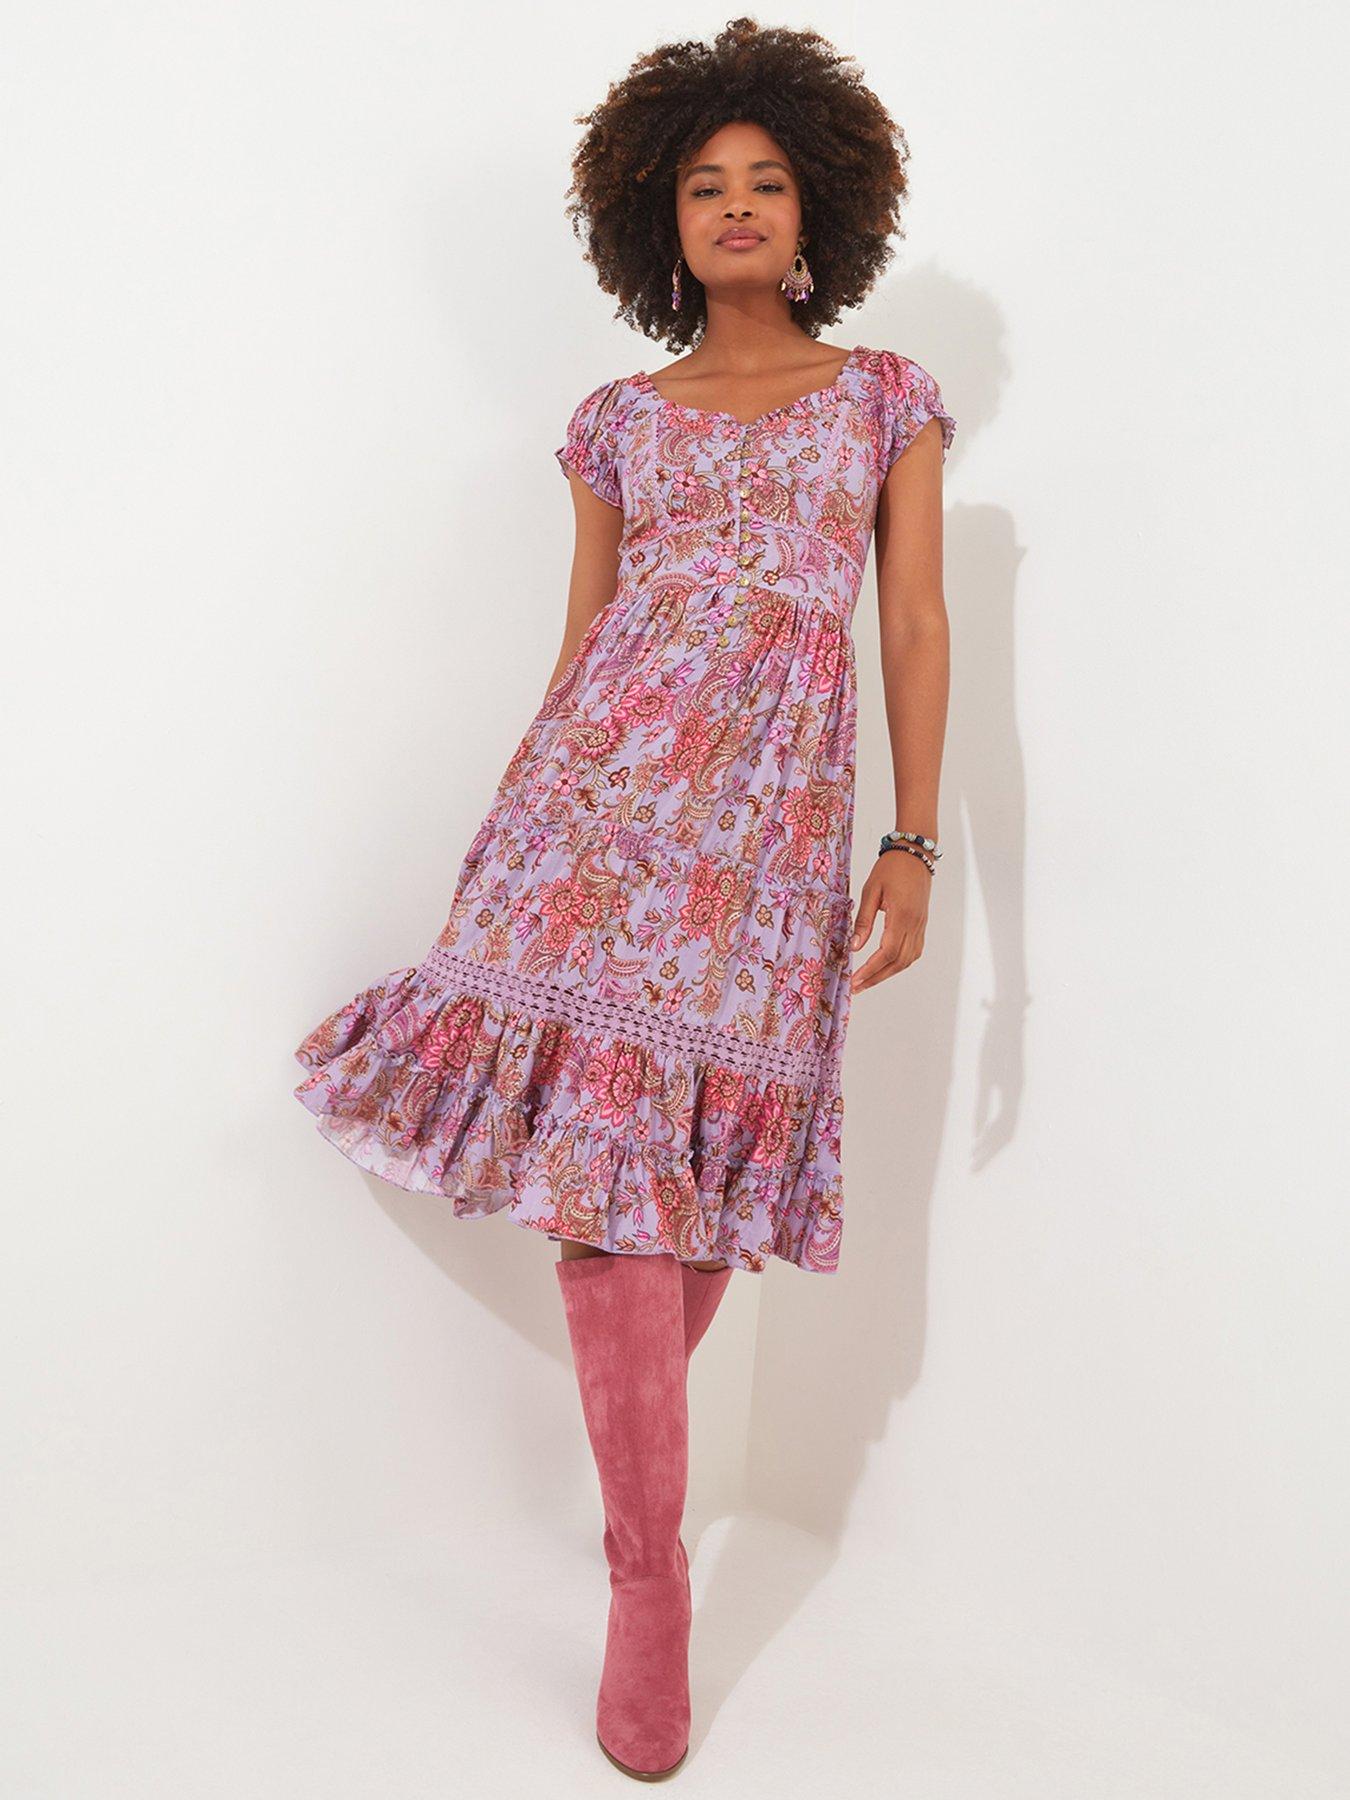 Boho Girl Floral and Stripe Print Splits Leggings - 5/6 – The Little  Clothing Company